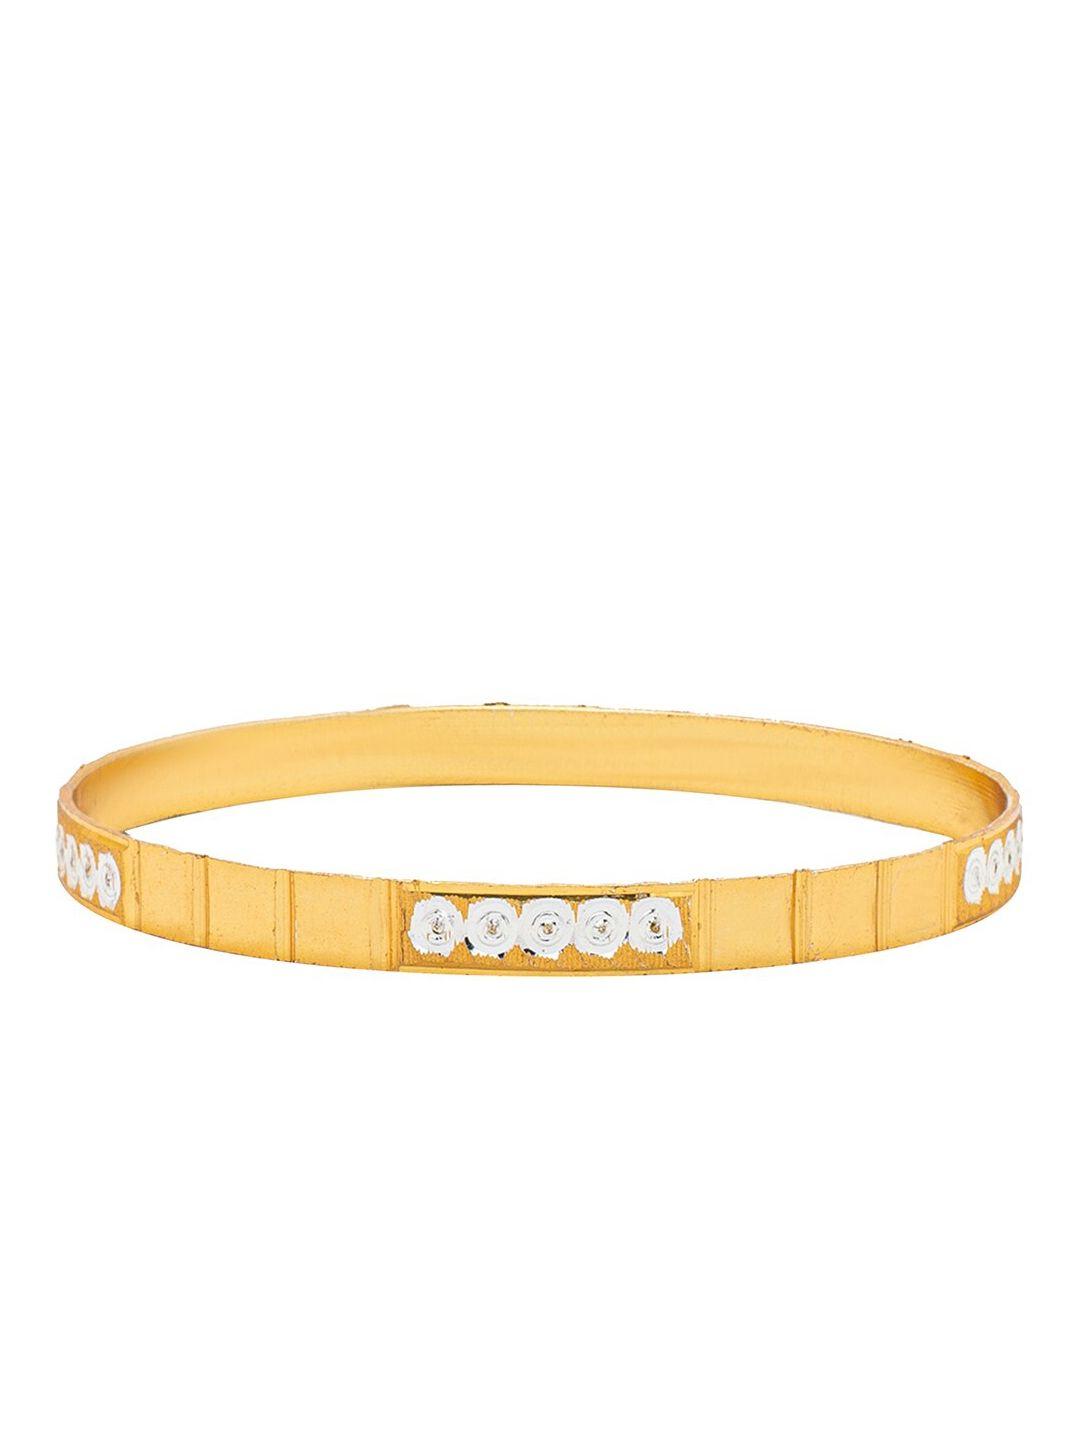 shining-jewel---by-shivansh--gold-&-silver-plated-traditional-designer-bangle-set